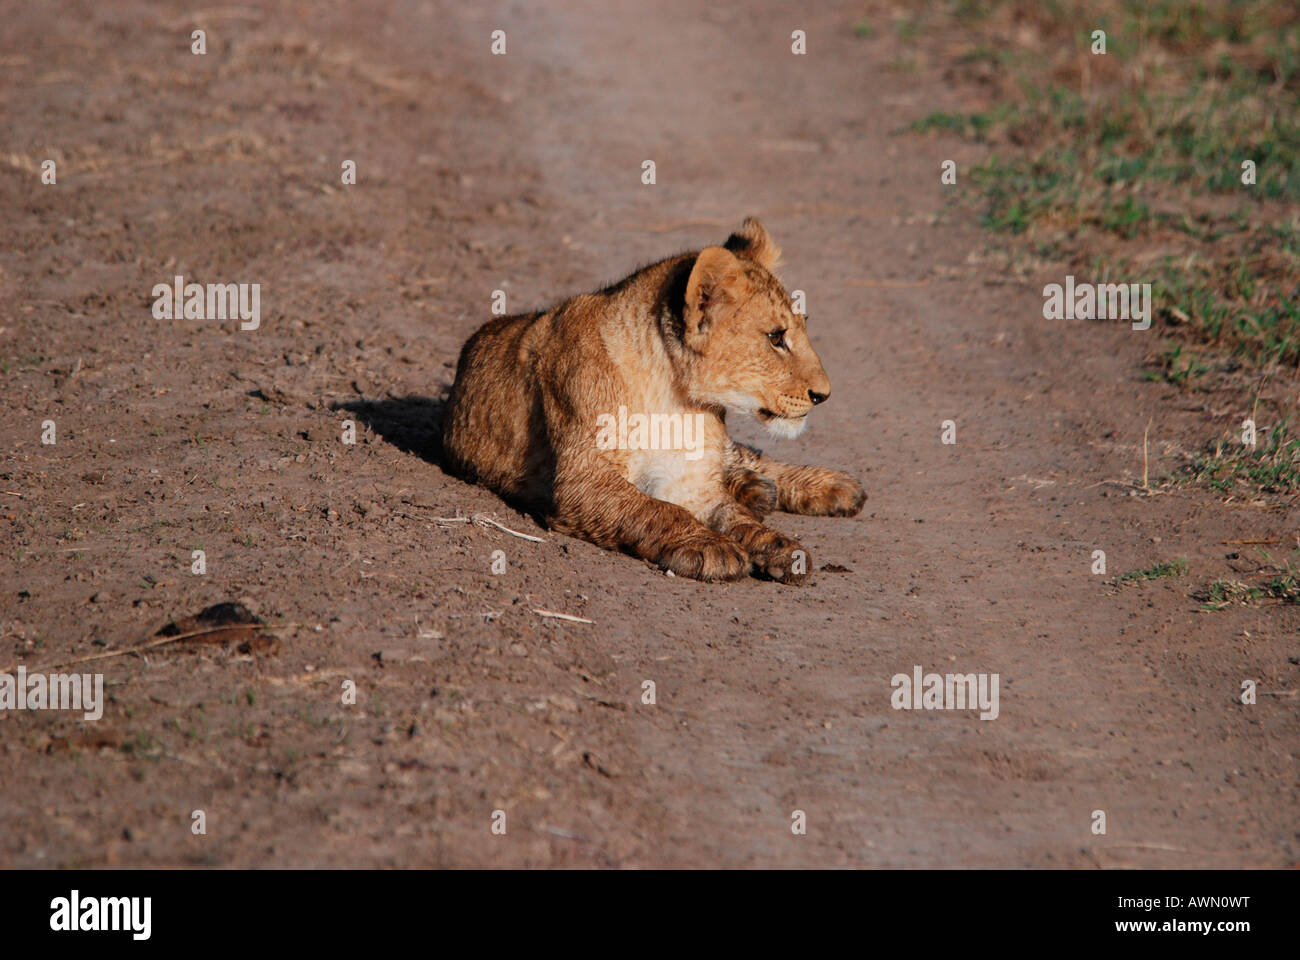 Lion cub (Panthera leo) lying on dirt road, Masai Mara, Kenya, Africa Stock Photo